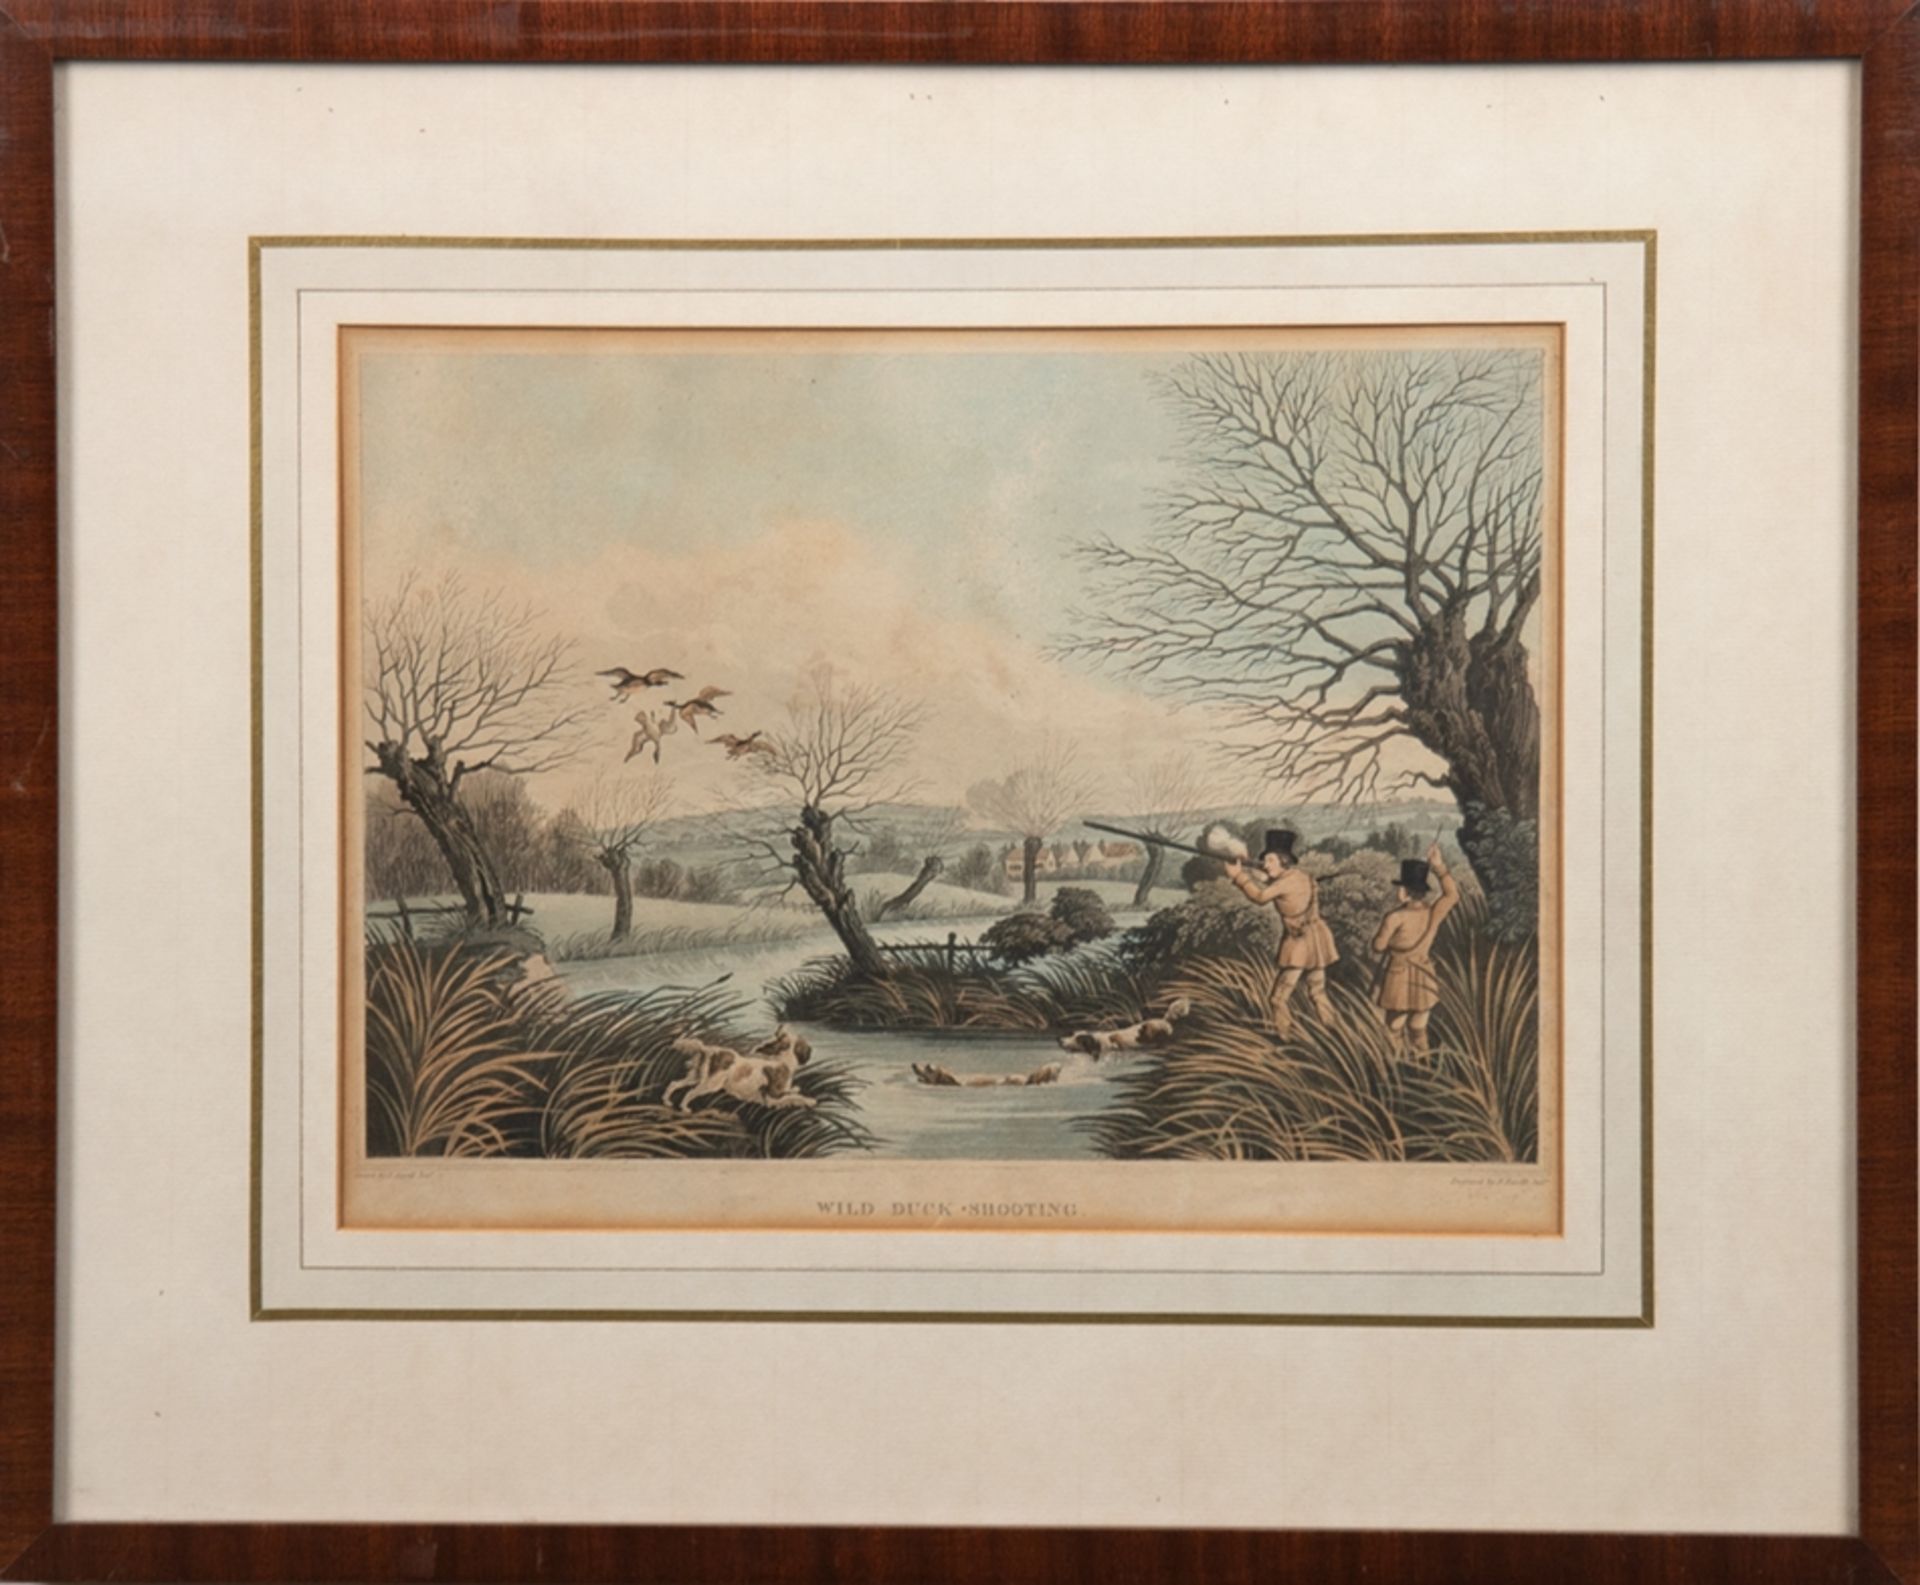 Havell, Robert (1793 Reading-1878 New York) "Wild Duck Shooting-Wildentenjagd", kolorierte Aquatint